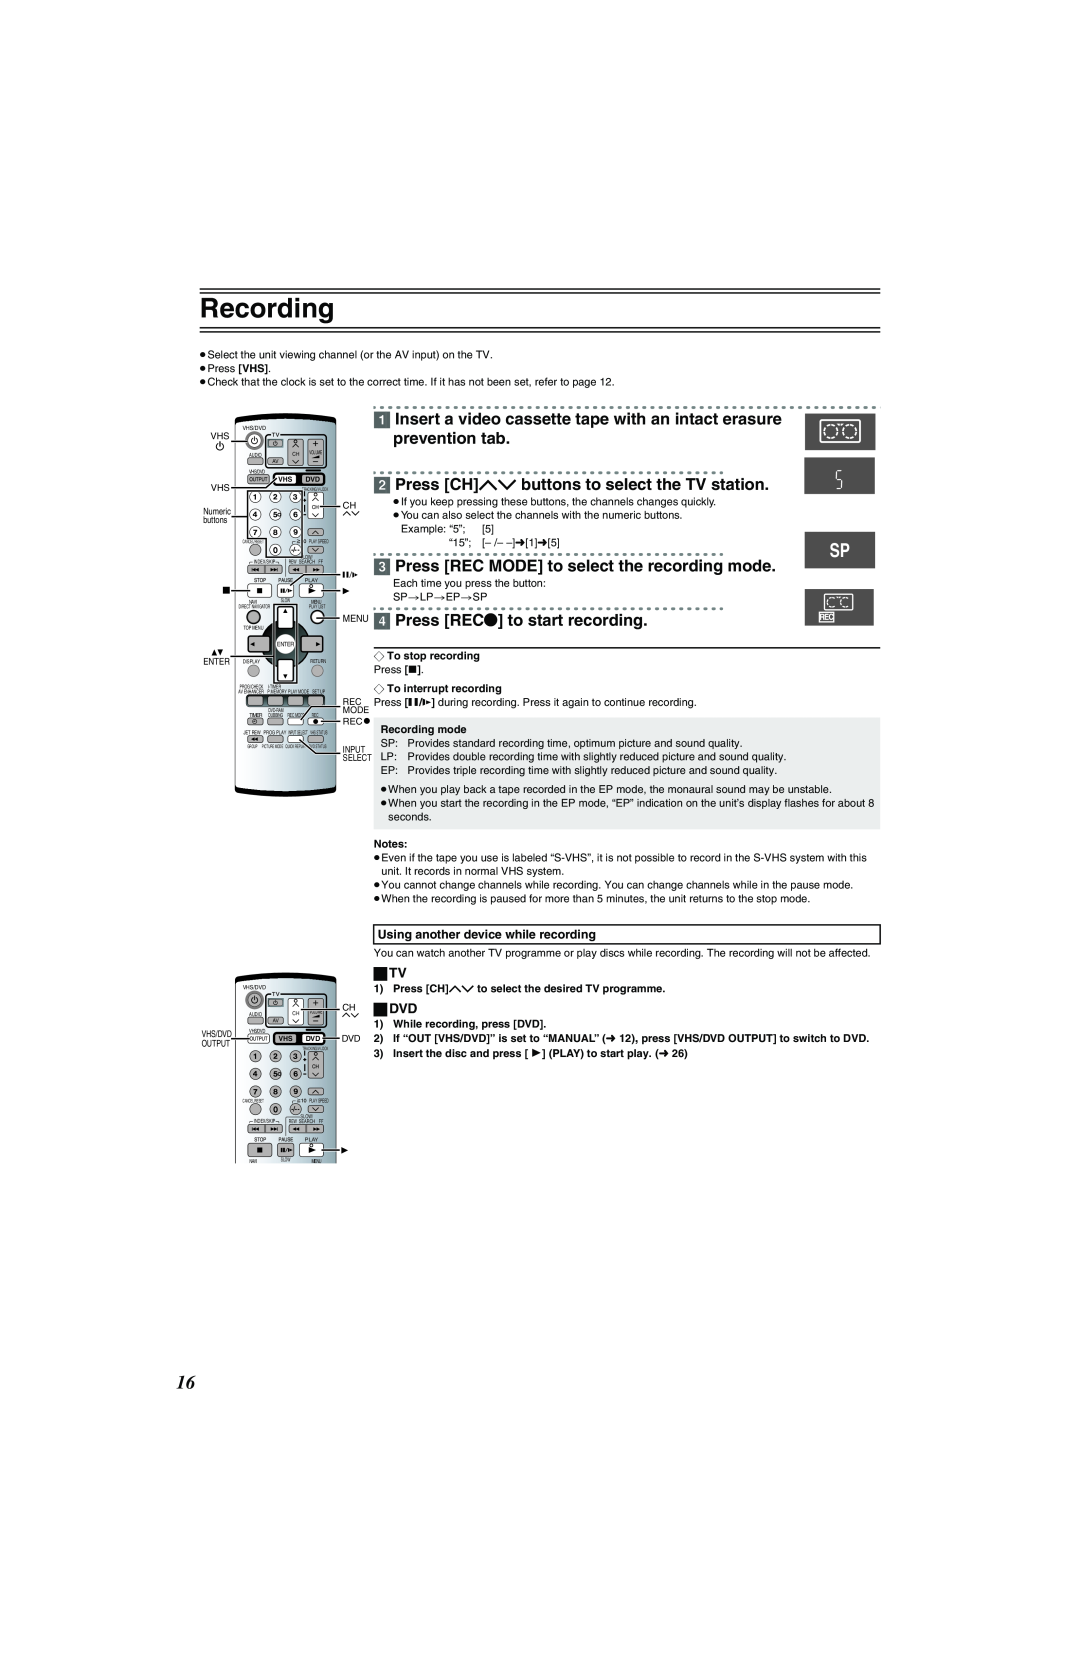 Panasonic NV-VP32 Series manual Recording, Insert a video cassette tape with an intact erasure prevention tab, ª Tv, ªdvd 